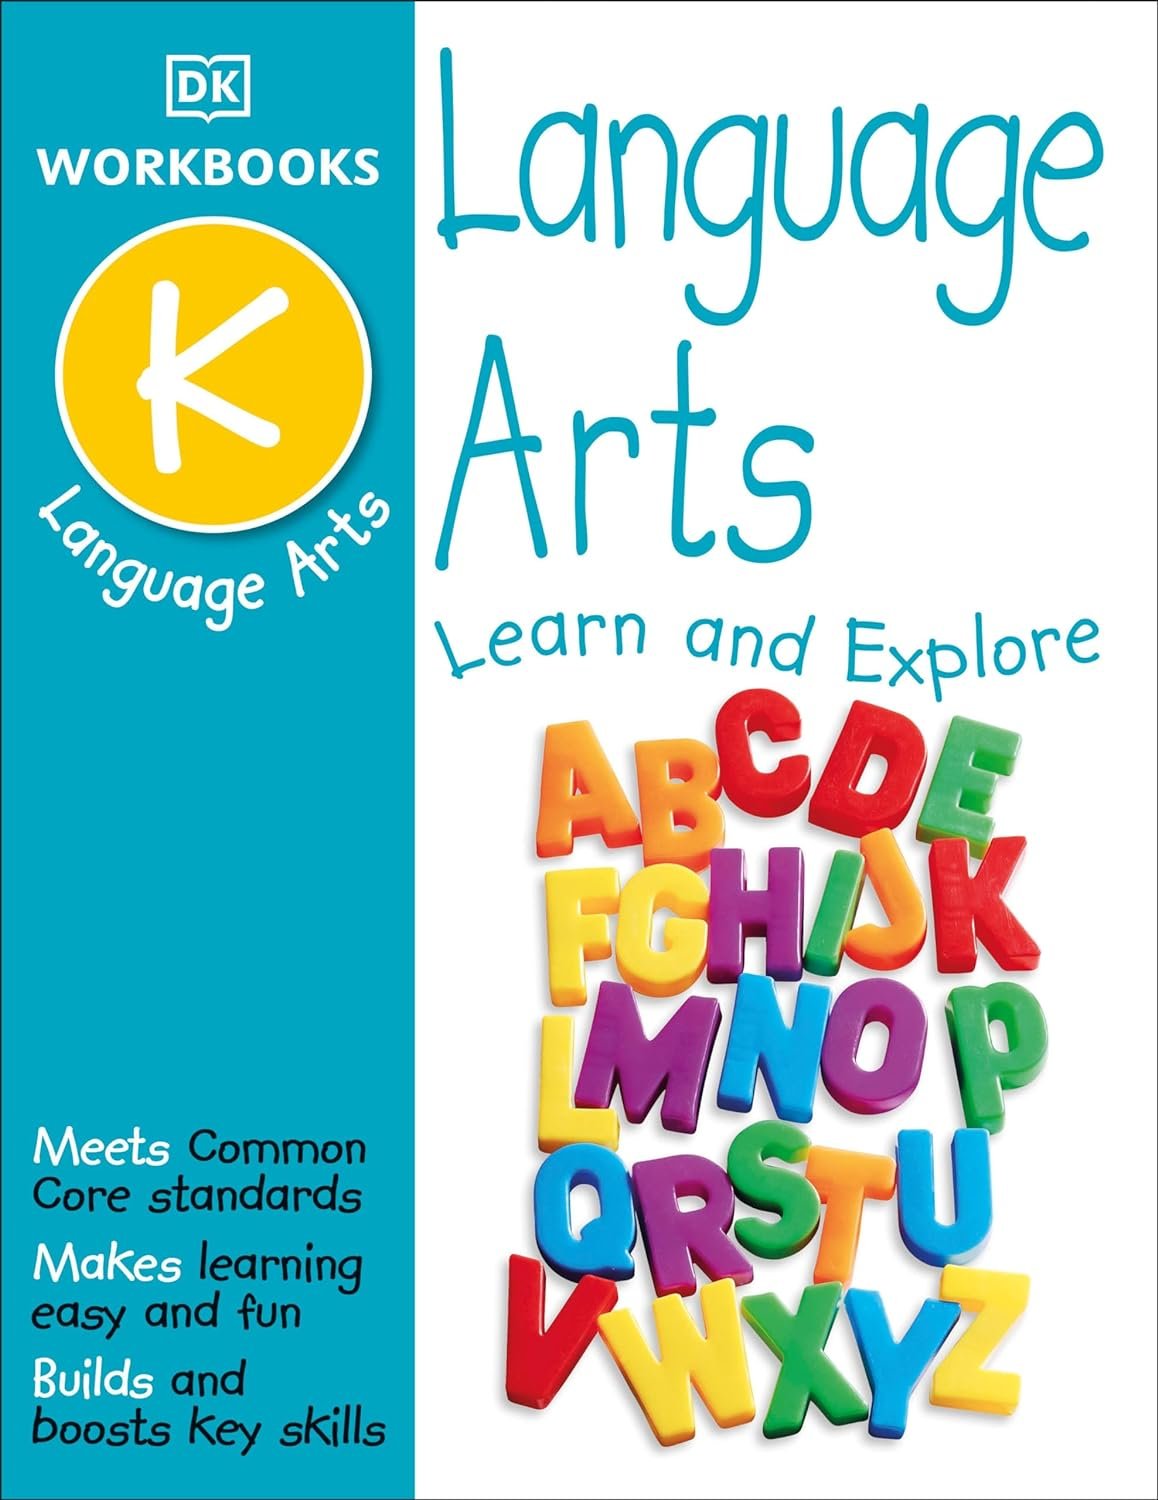 DK Workbooks: Language Arts, Kindergarten: Learn and Explore